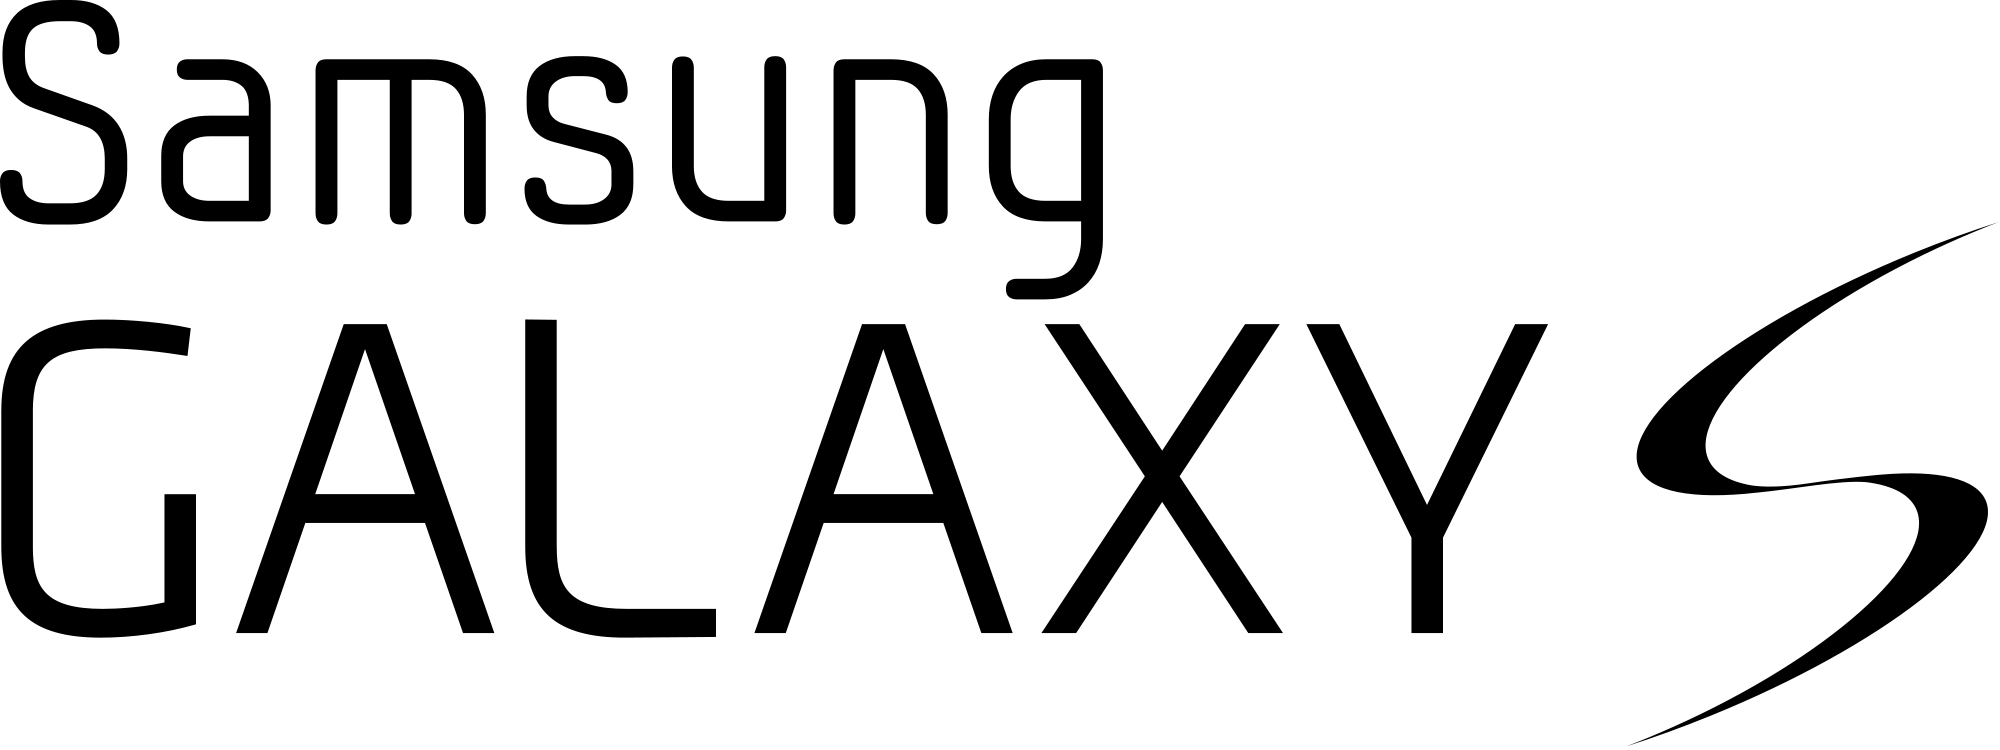 Samsung Galaxy Logo - Samsung Galaxy S logo.svg